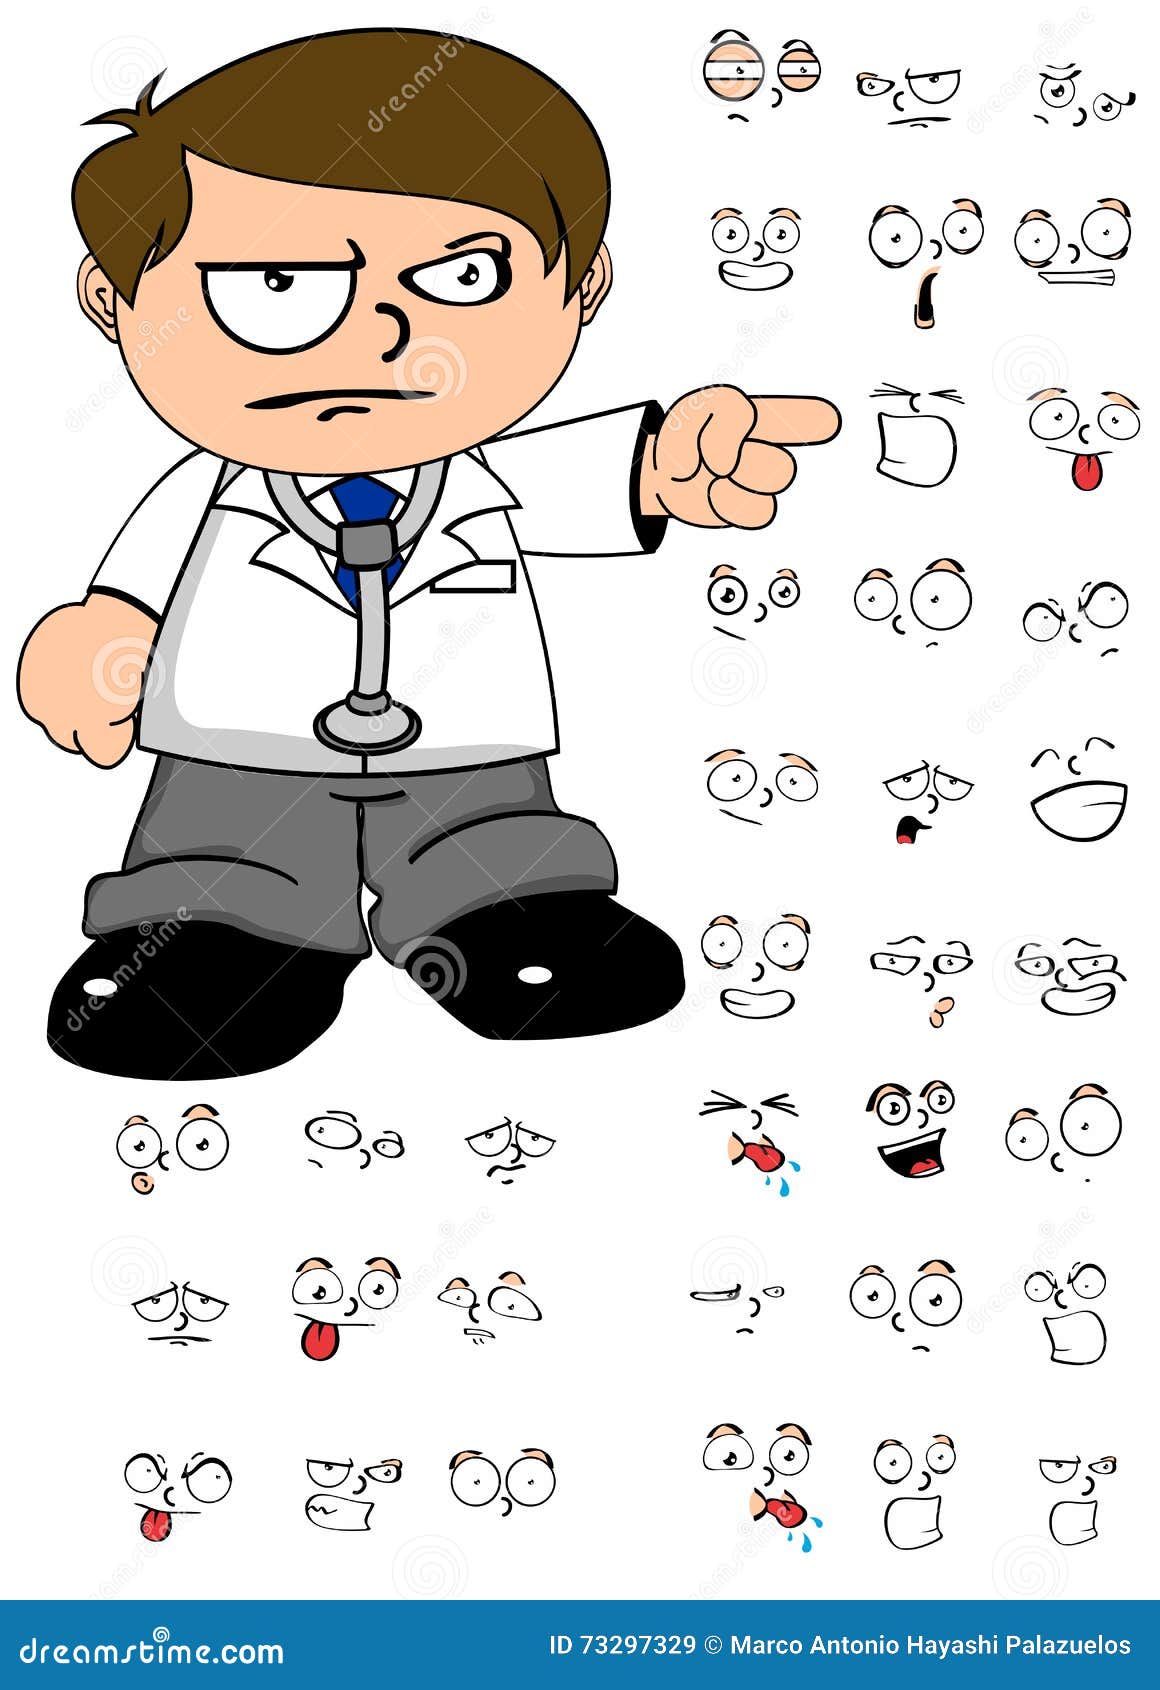 kid doctor cartoon expresion set